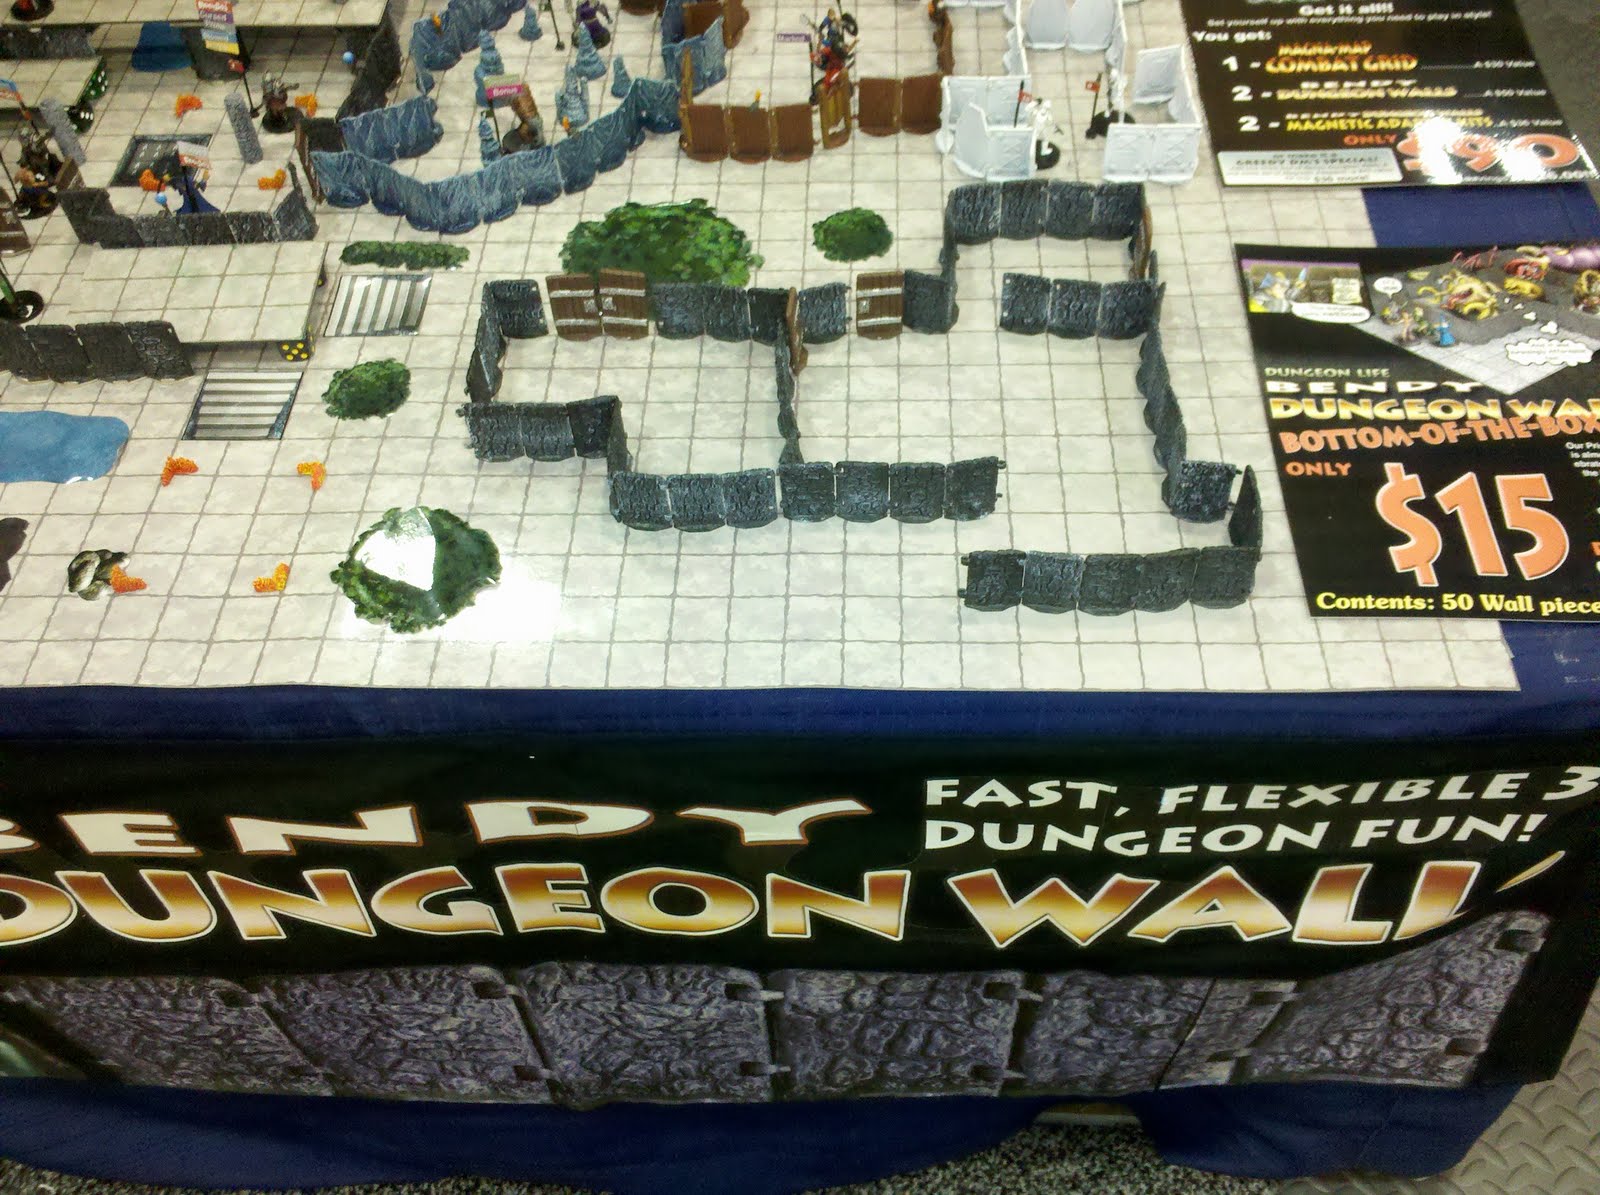 Bendy Dungeon Walls